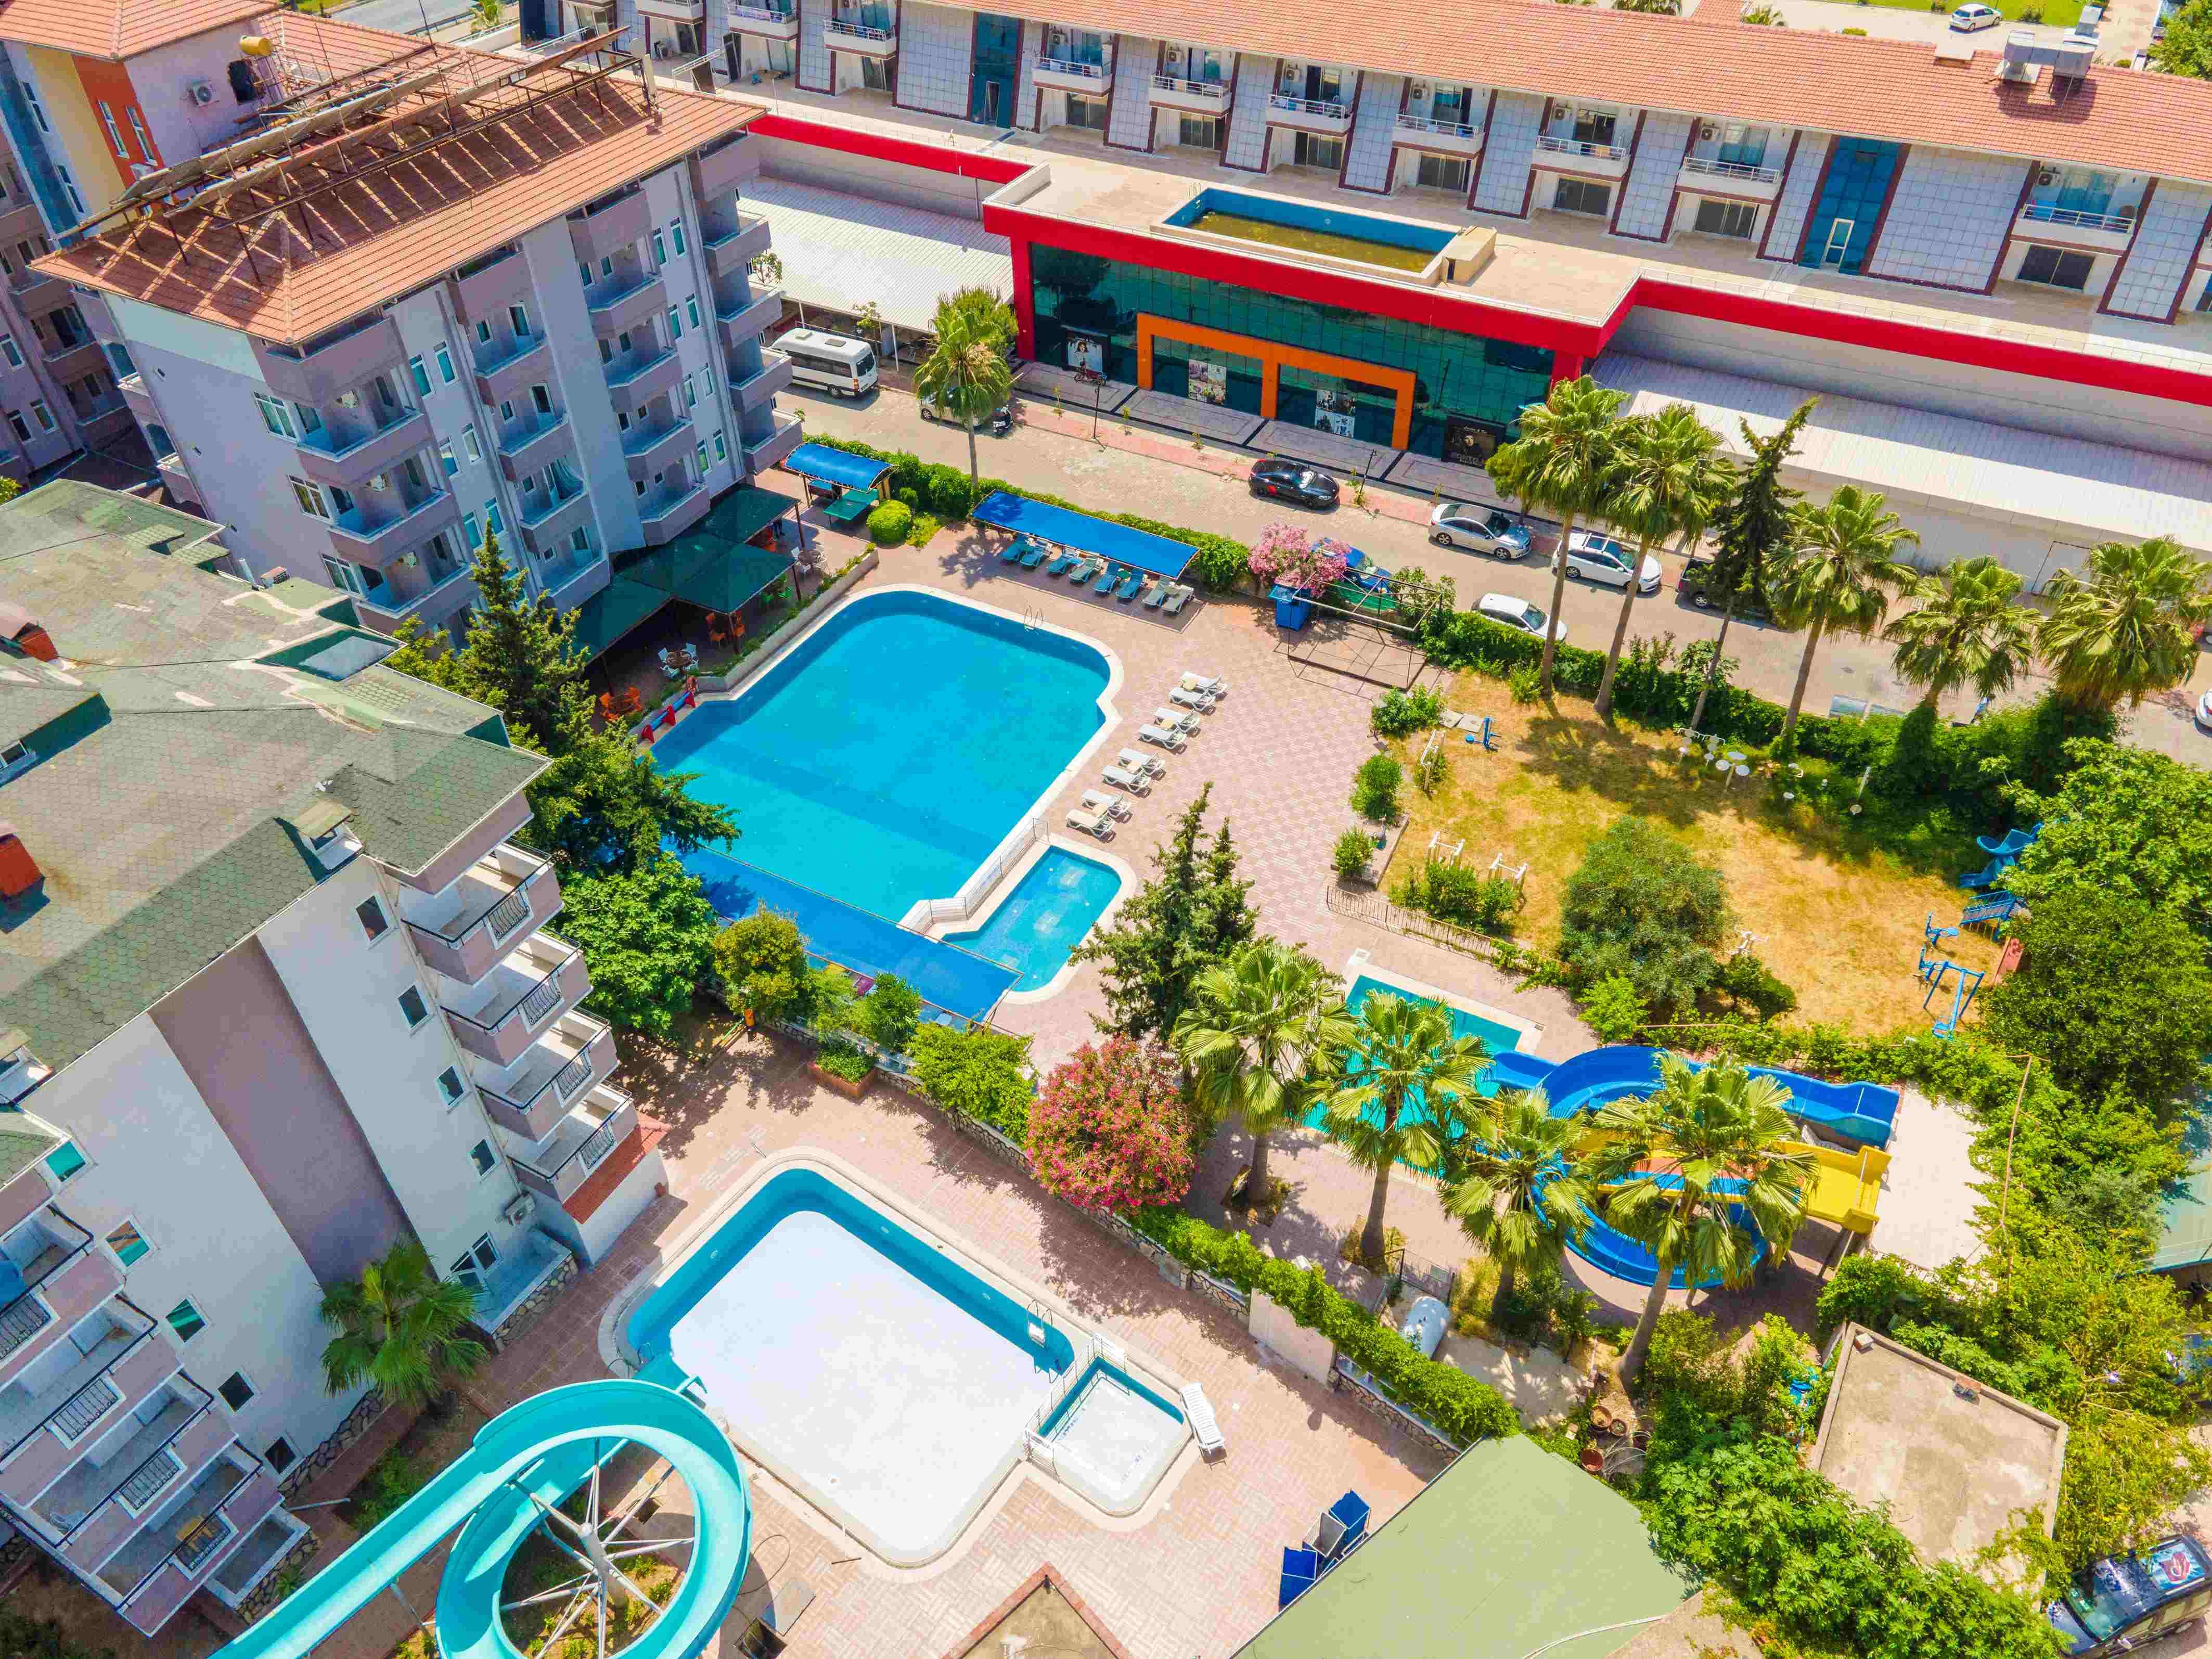 Grand Bahama Beach Hotel 3*